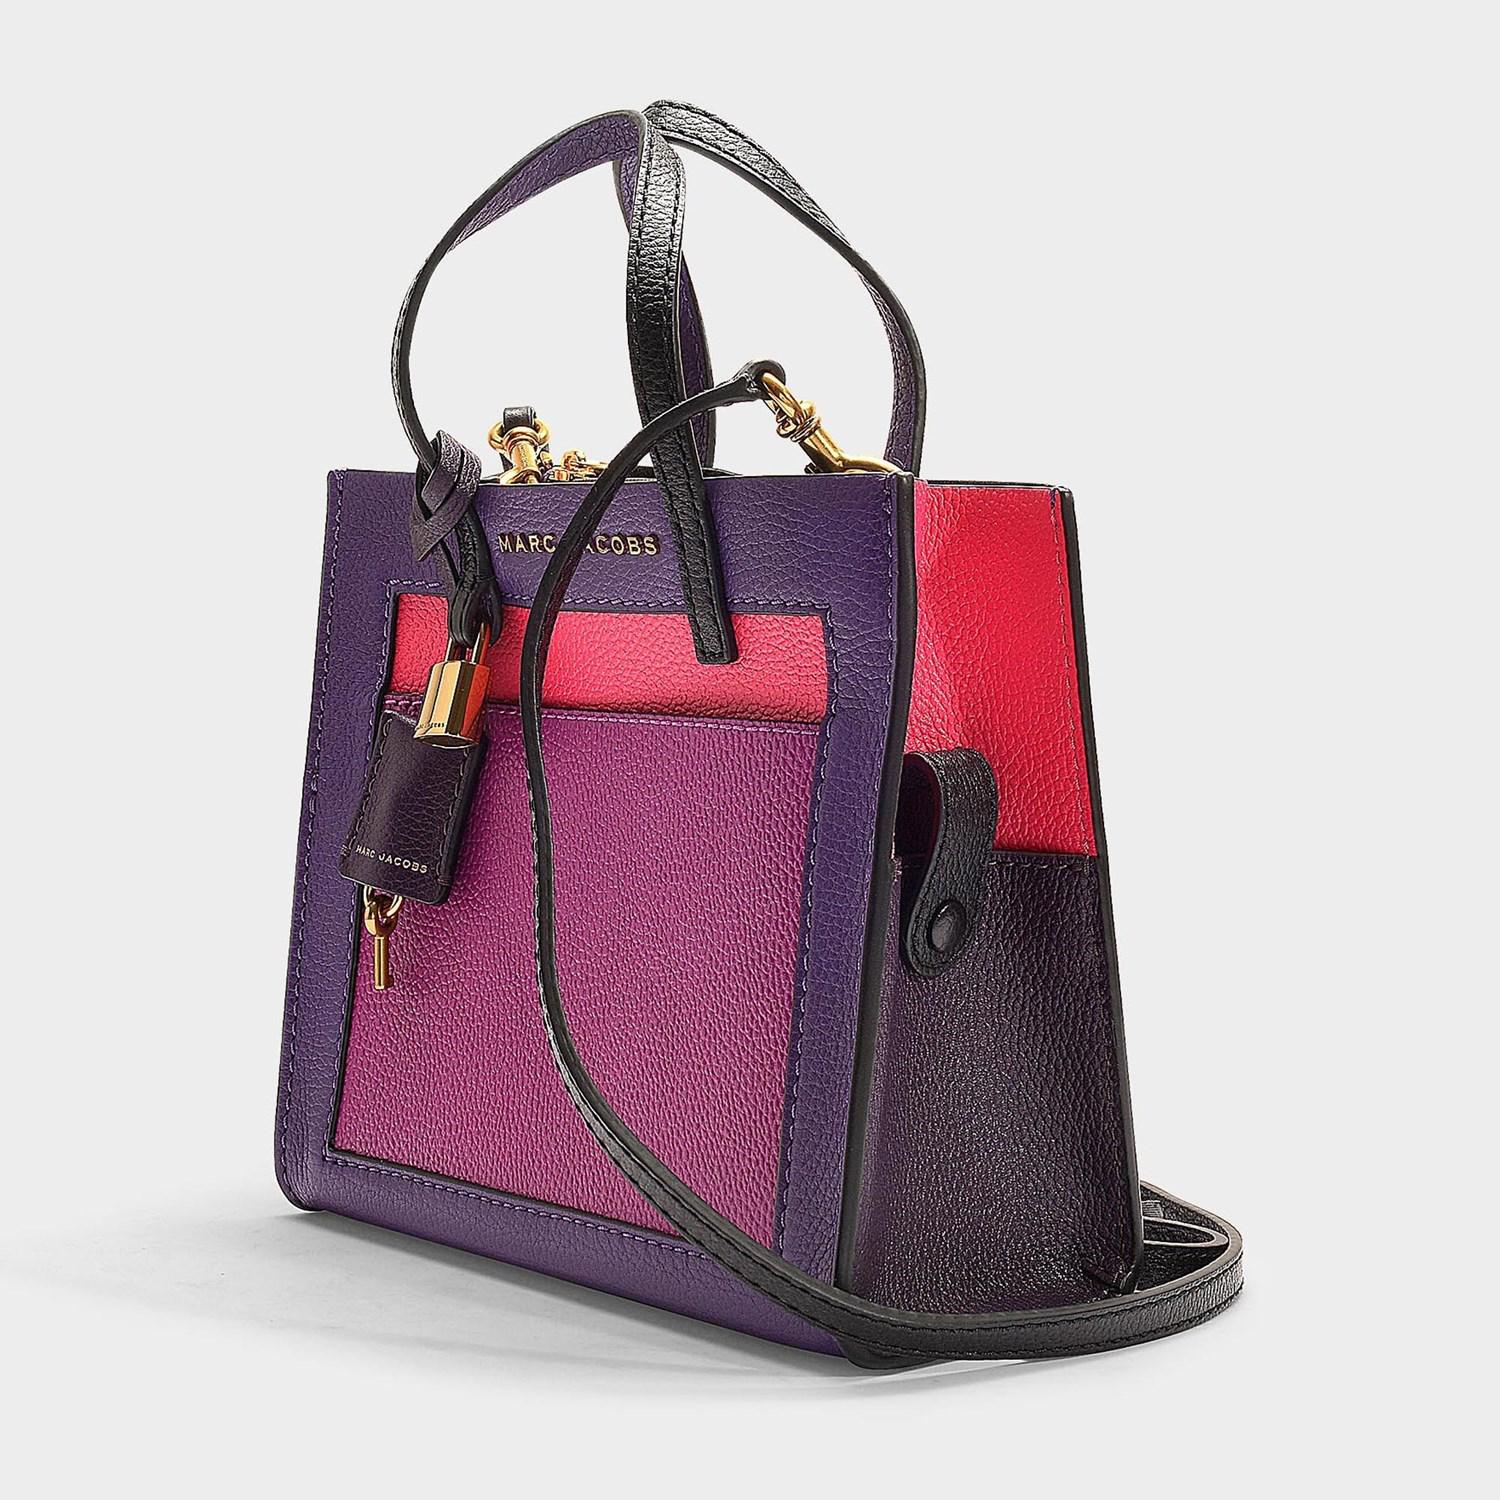 Marc Jacobs Mini Grind Tote Bag in Purple - Lyst